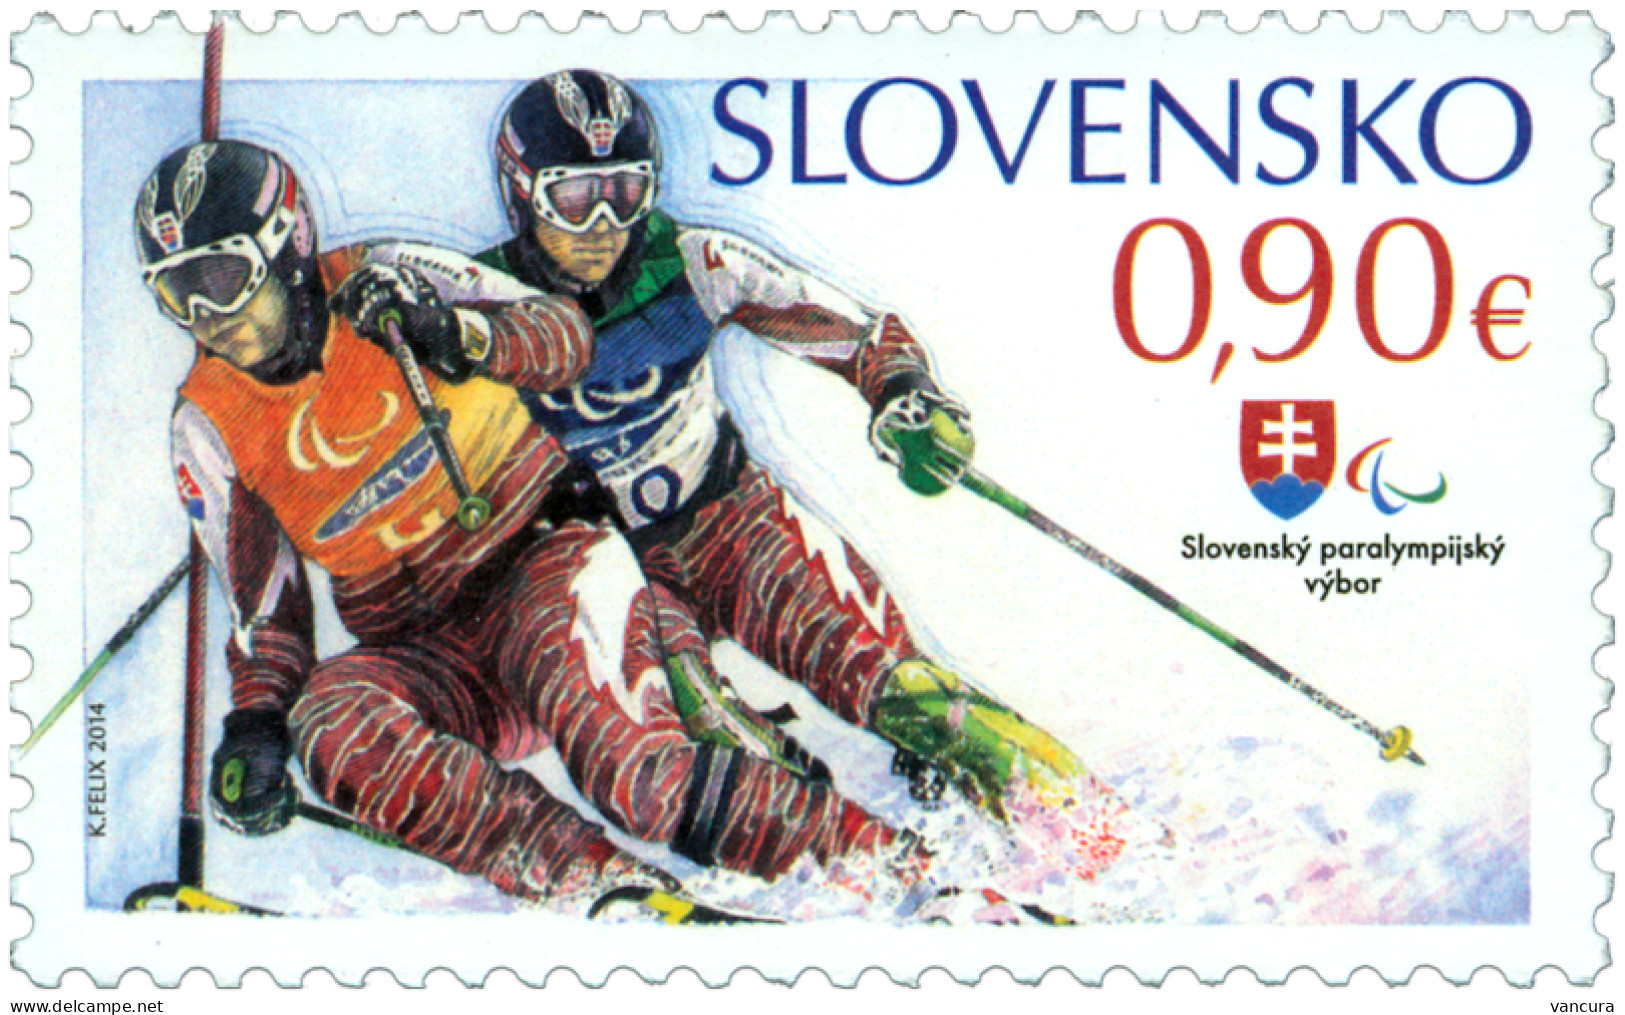 557 Slovakia Winter Paralympic Games Sotchi 2014 Skiing - Inverno 2014: Sotchi